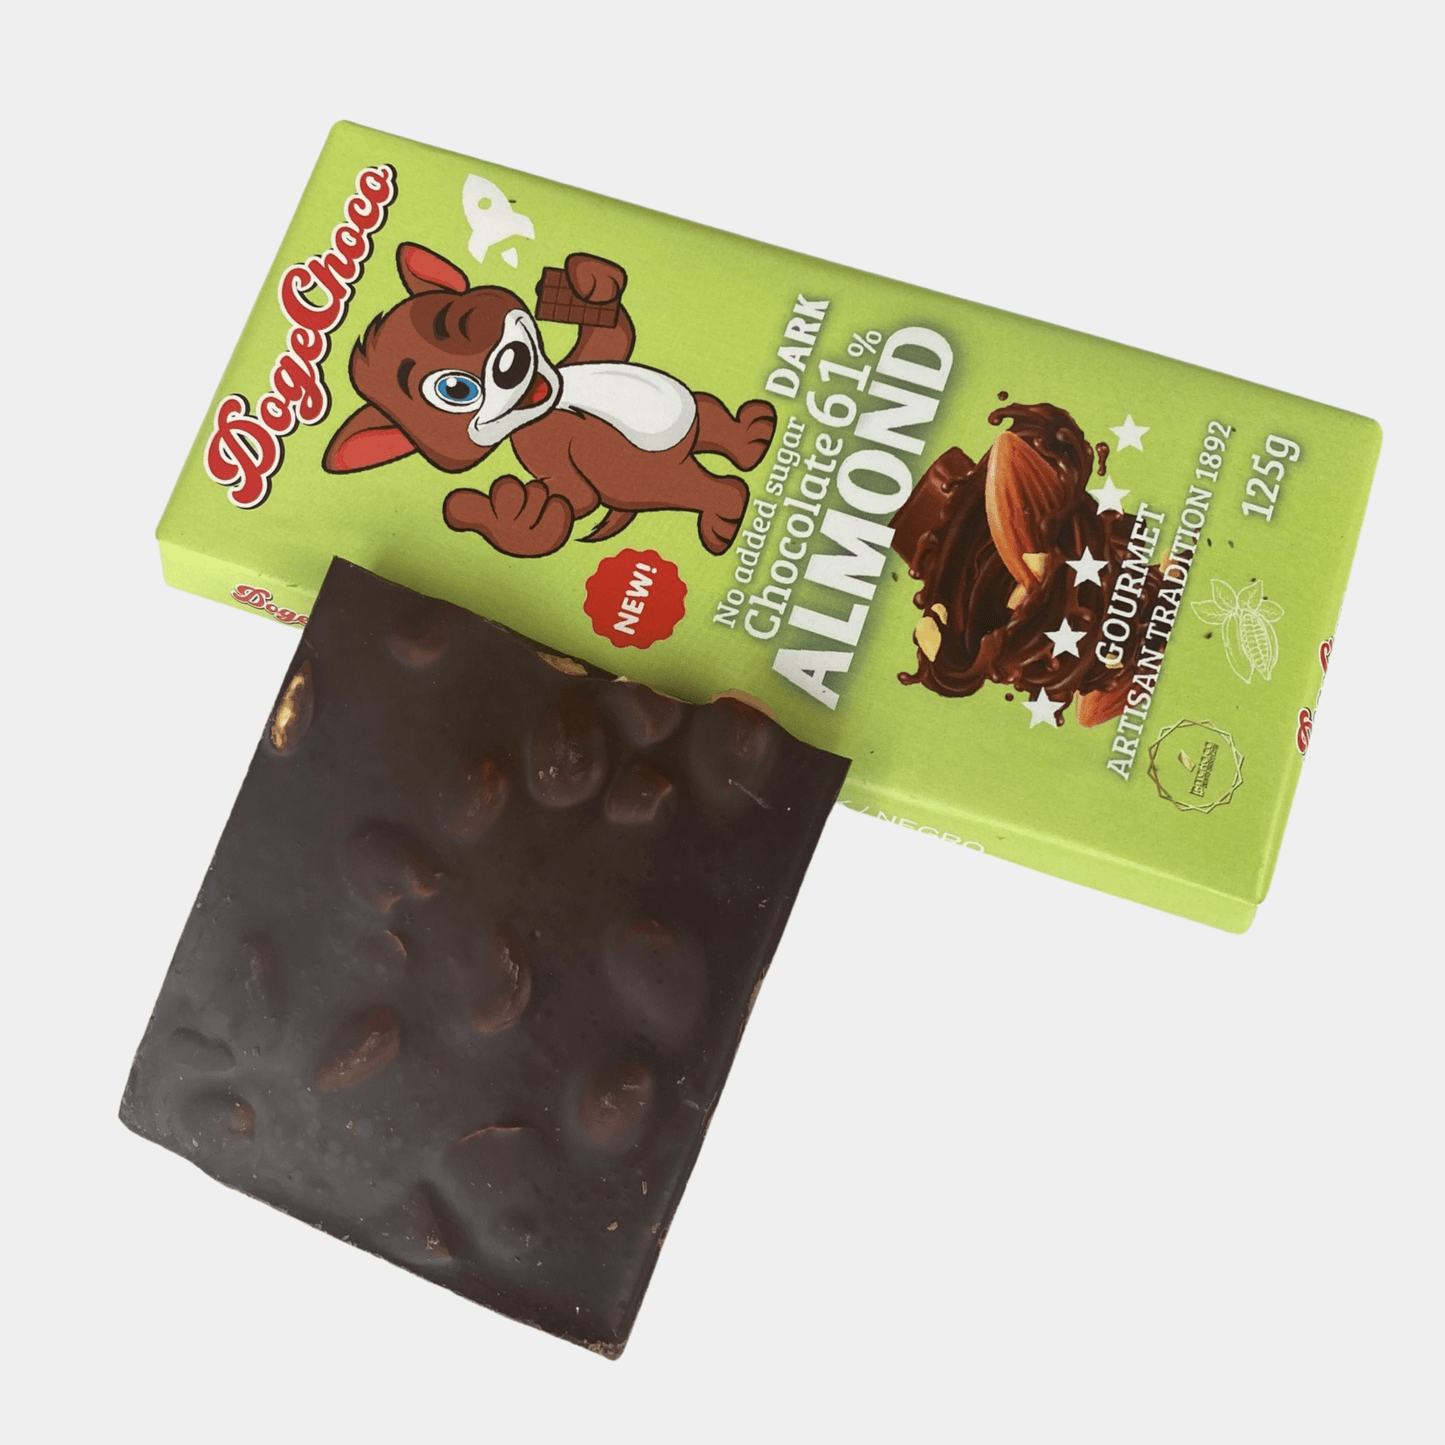 Crypto Chocolate 61% Puro Cacao (sin azúcares añadidos) 125G Dogechoco